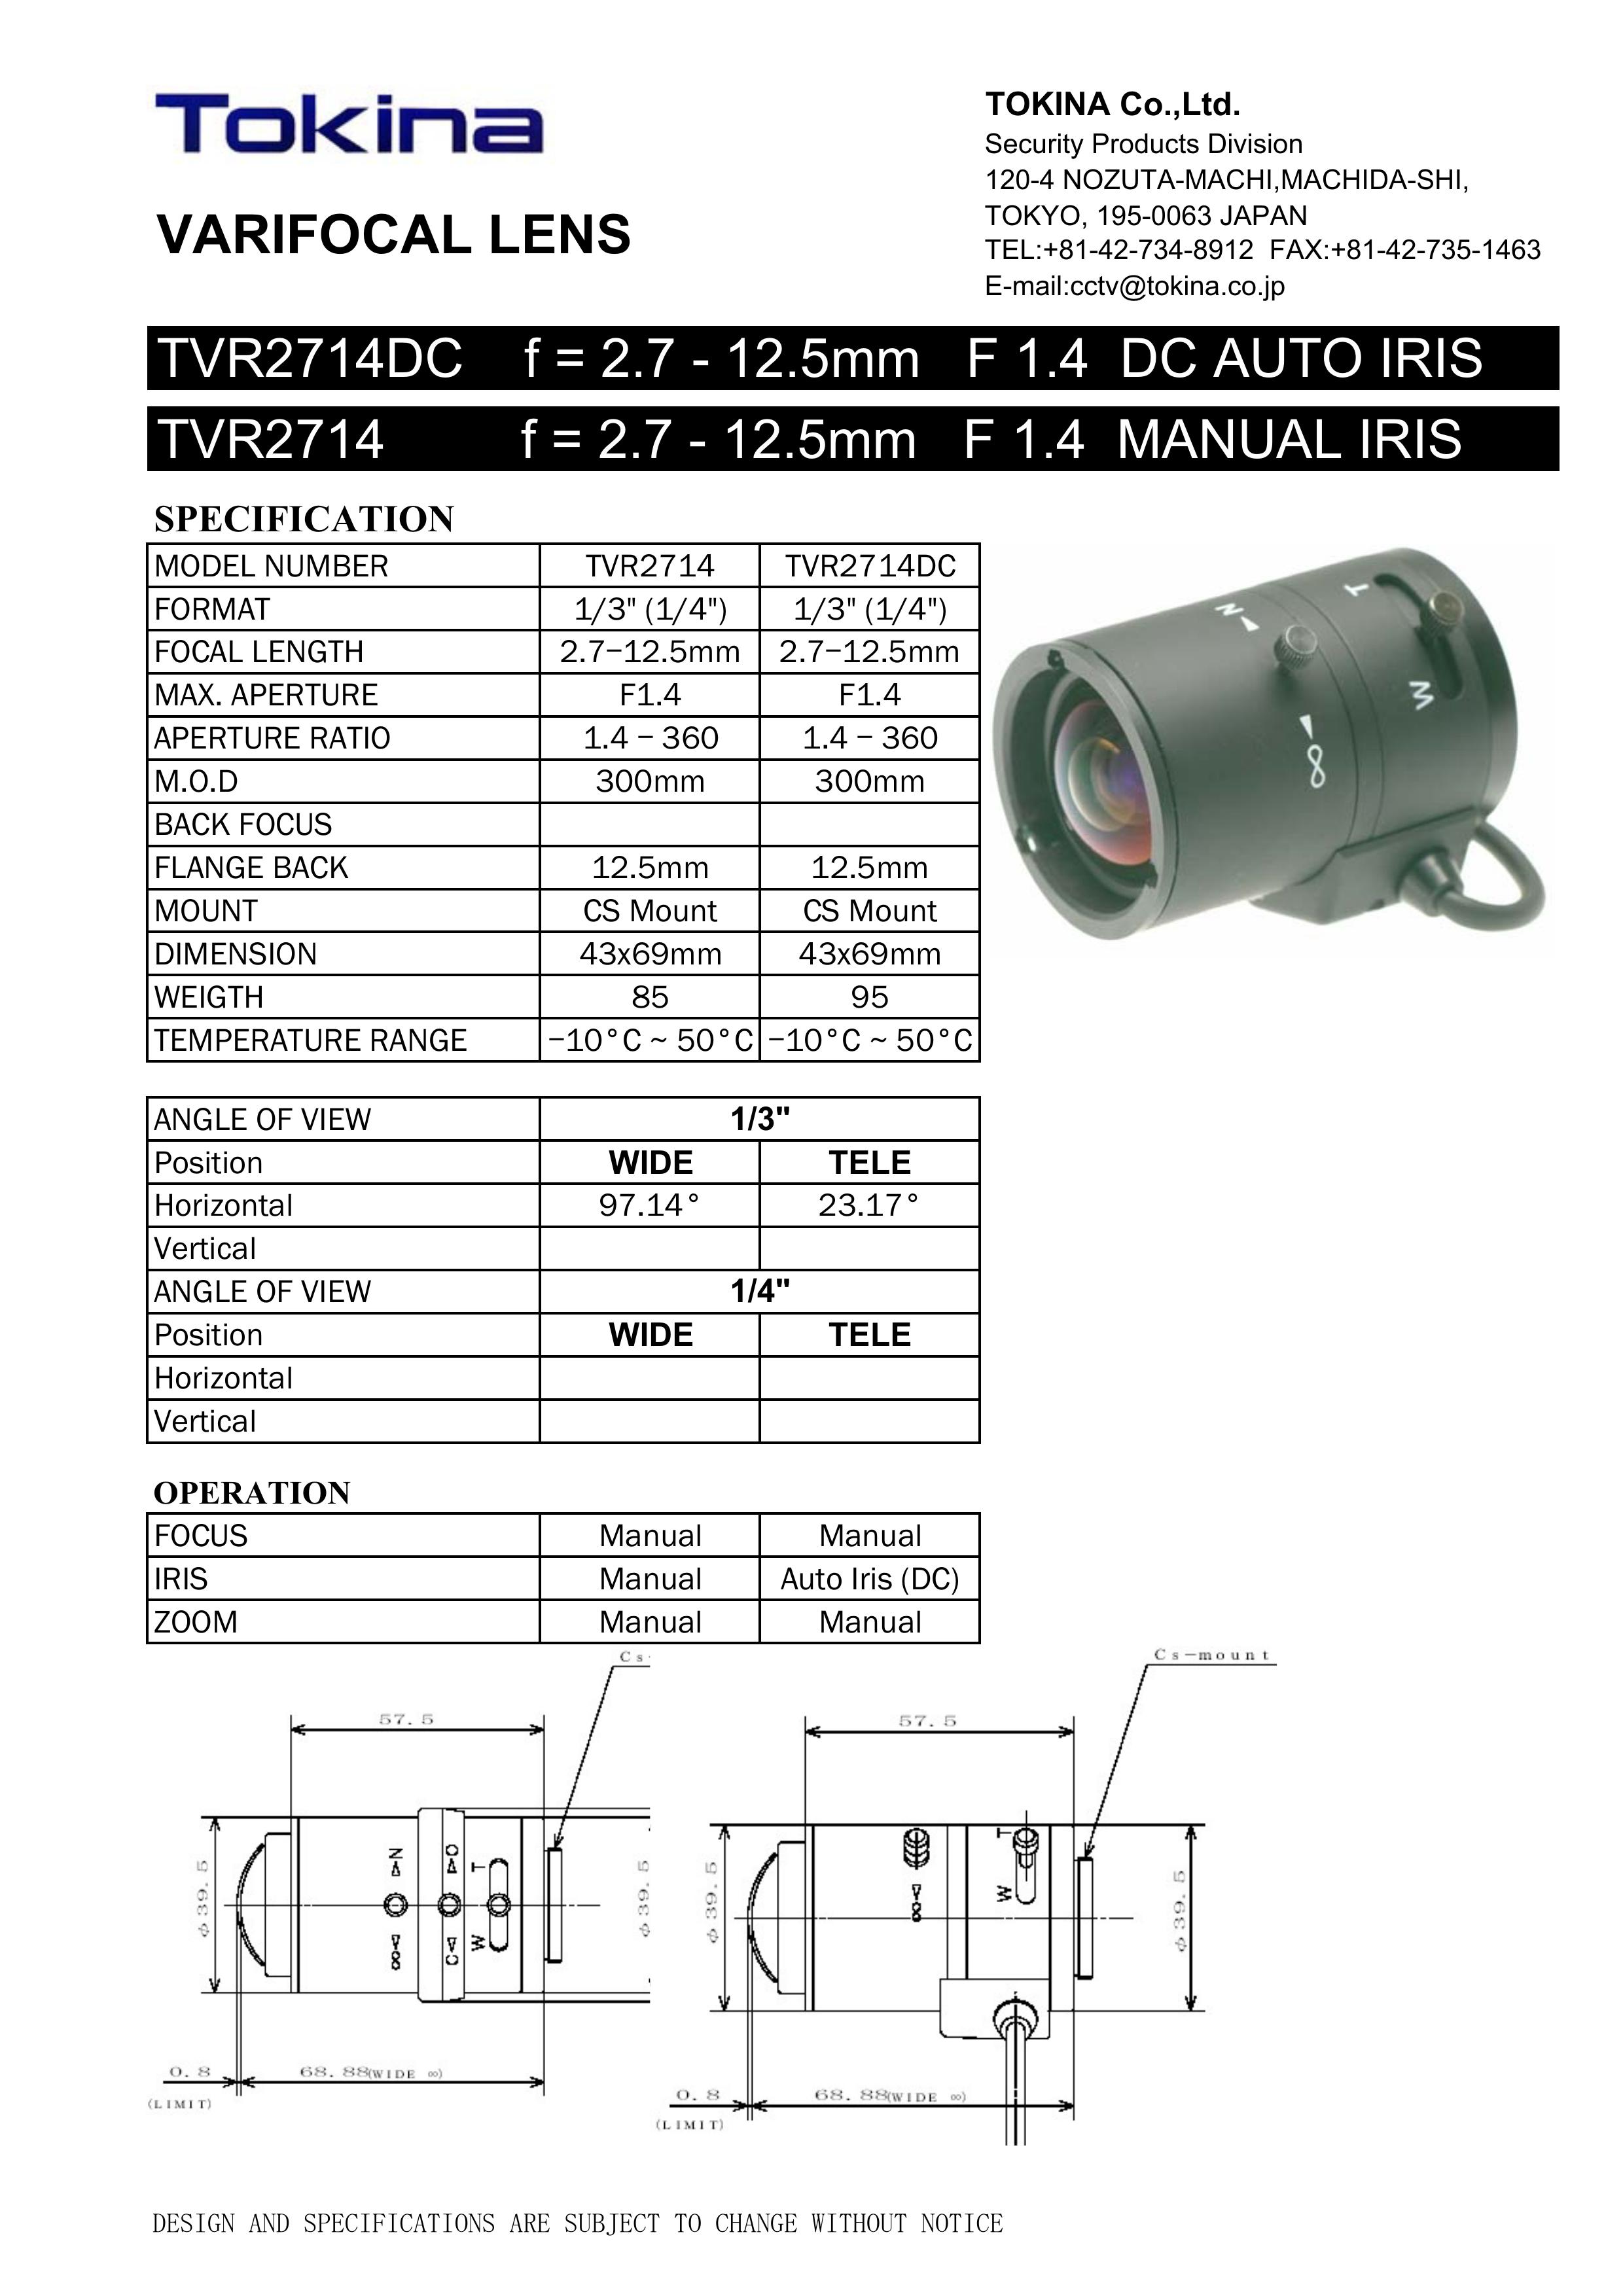 Tokina TVR2714 Camera Accessories User Manual